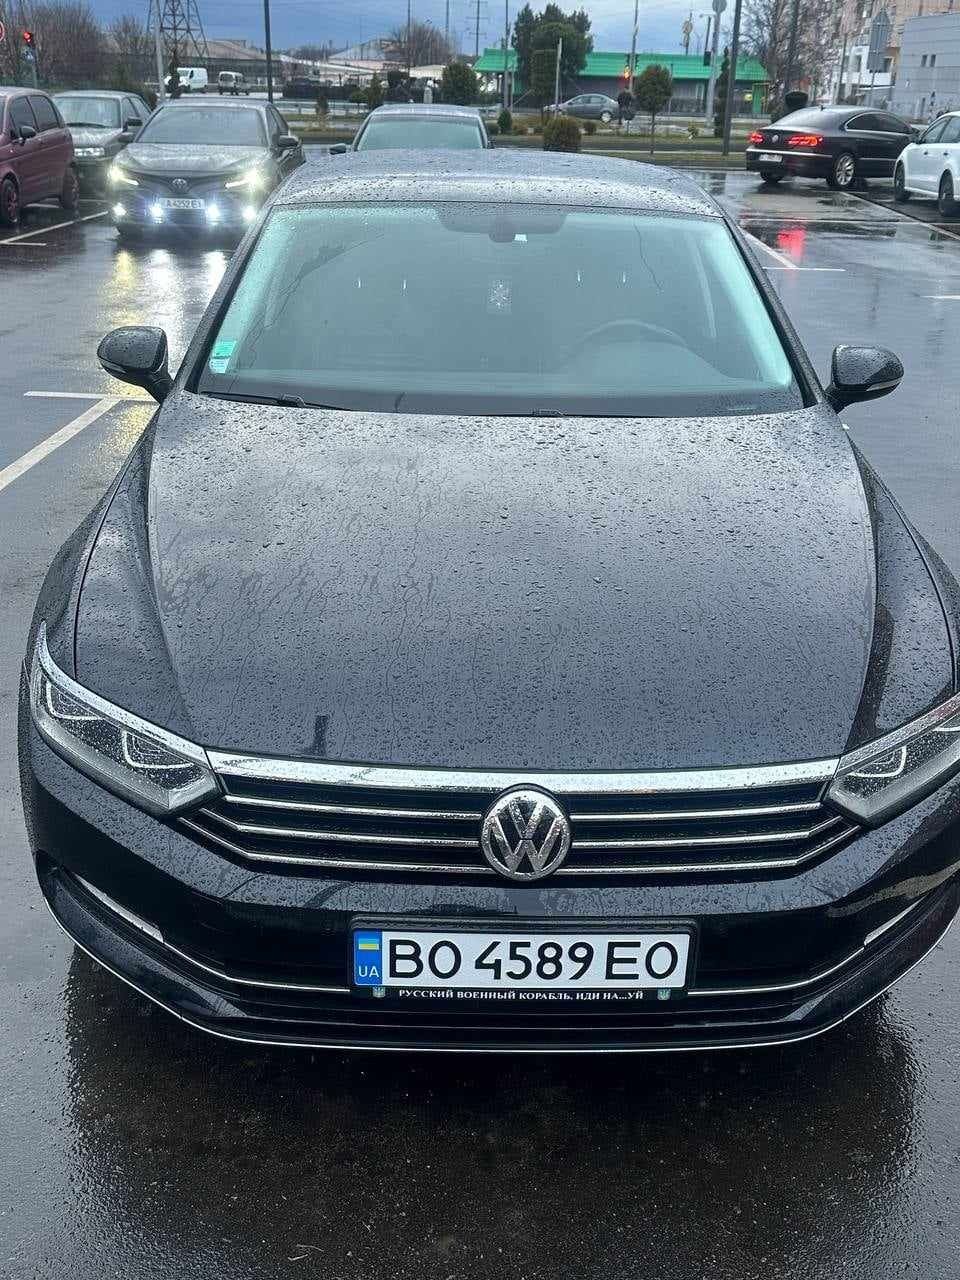 Продається Volkswagen Passat B8 2016 рік 1.6 дизель